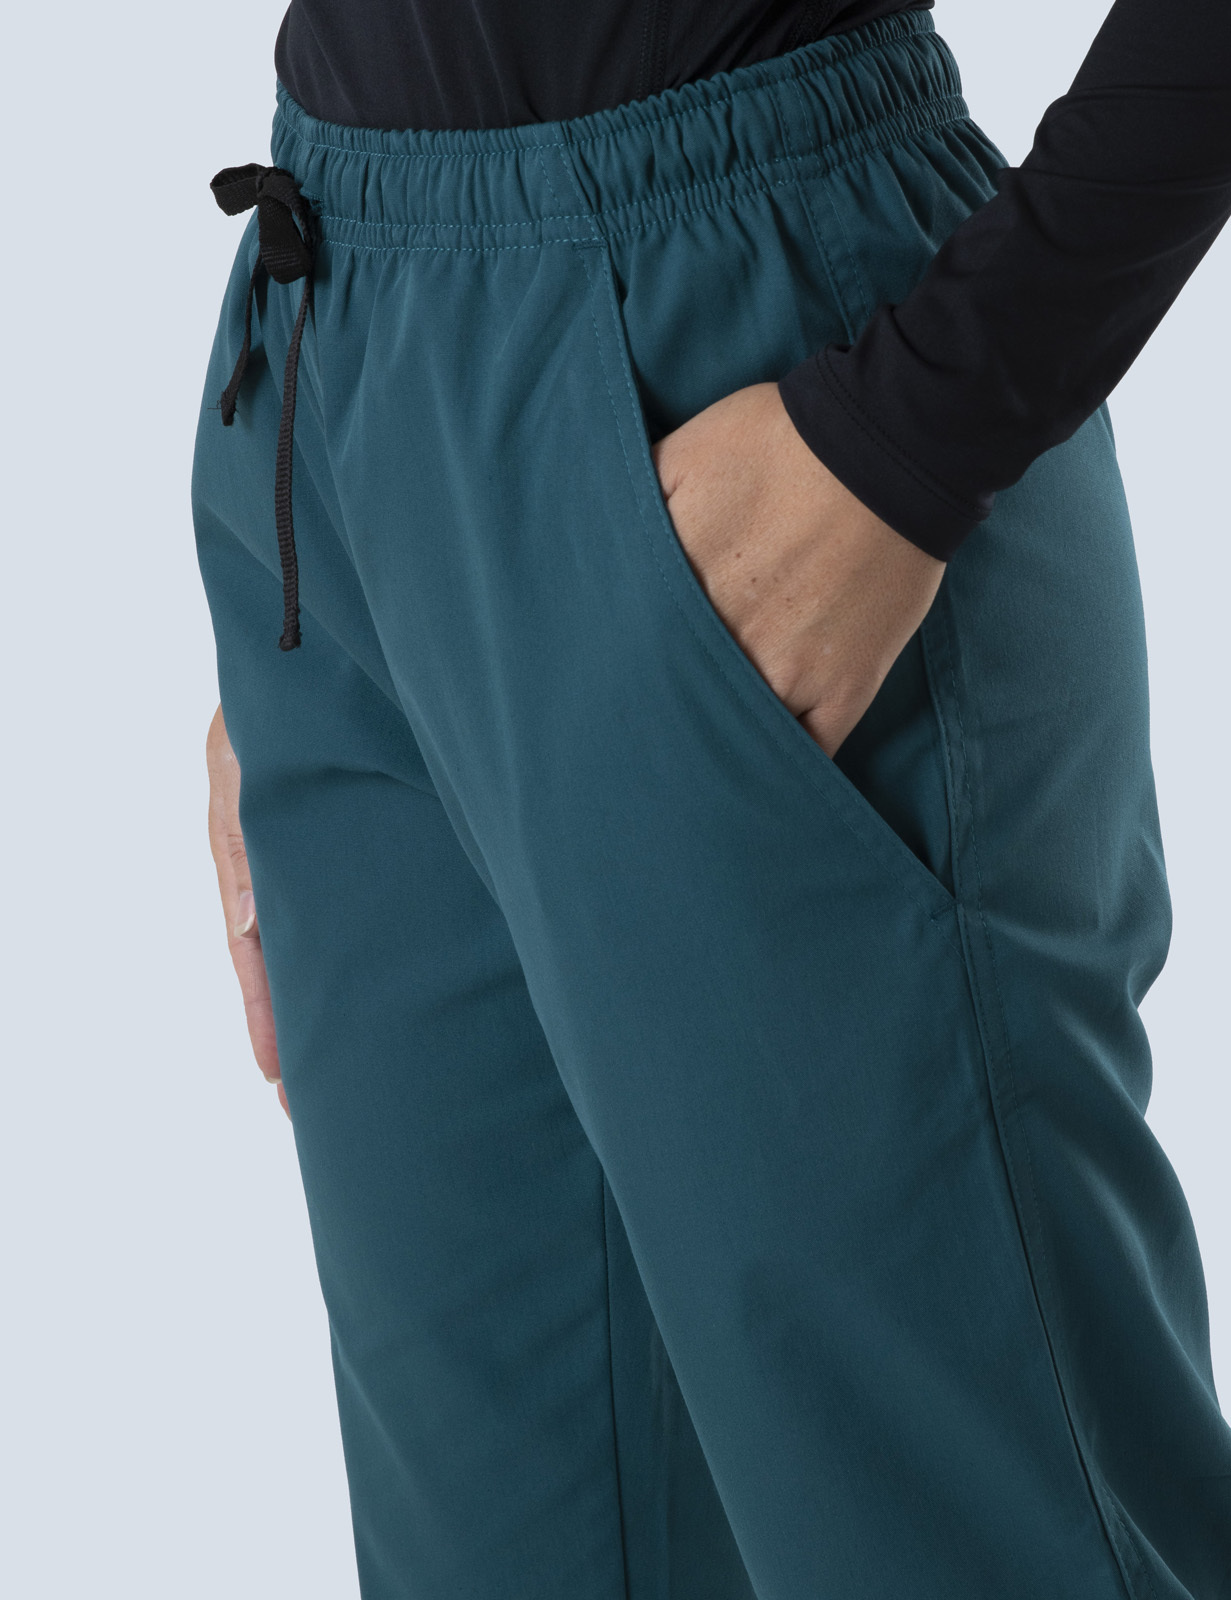 Women's Regular Cut Pants - Caribbean - 3X Large - 2